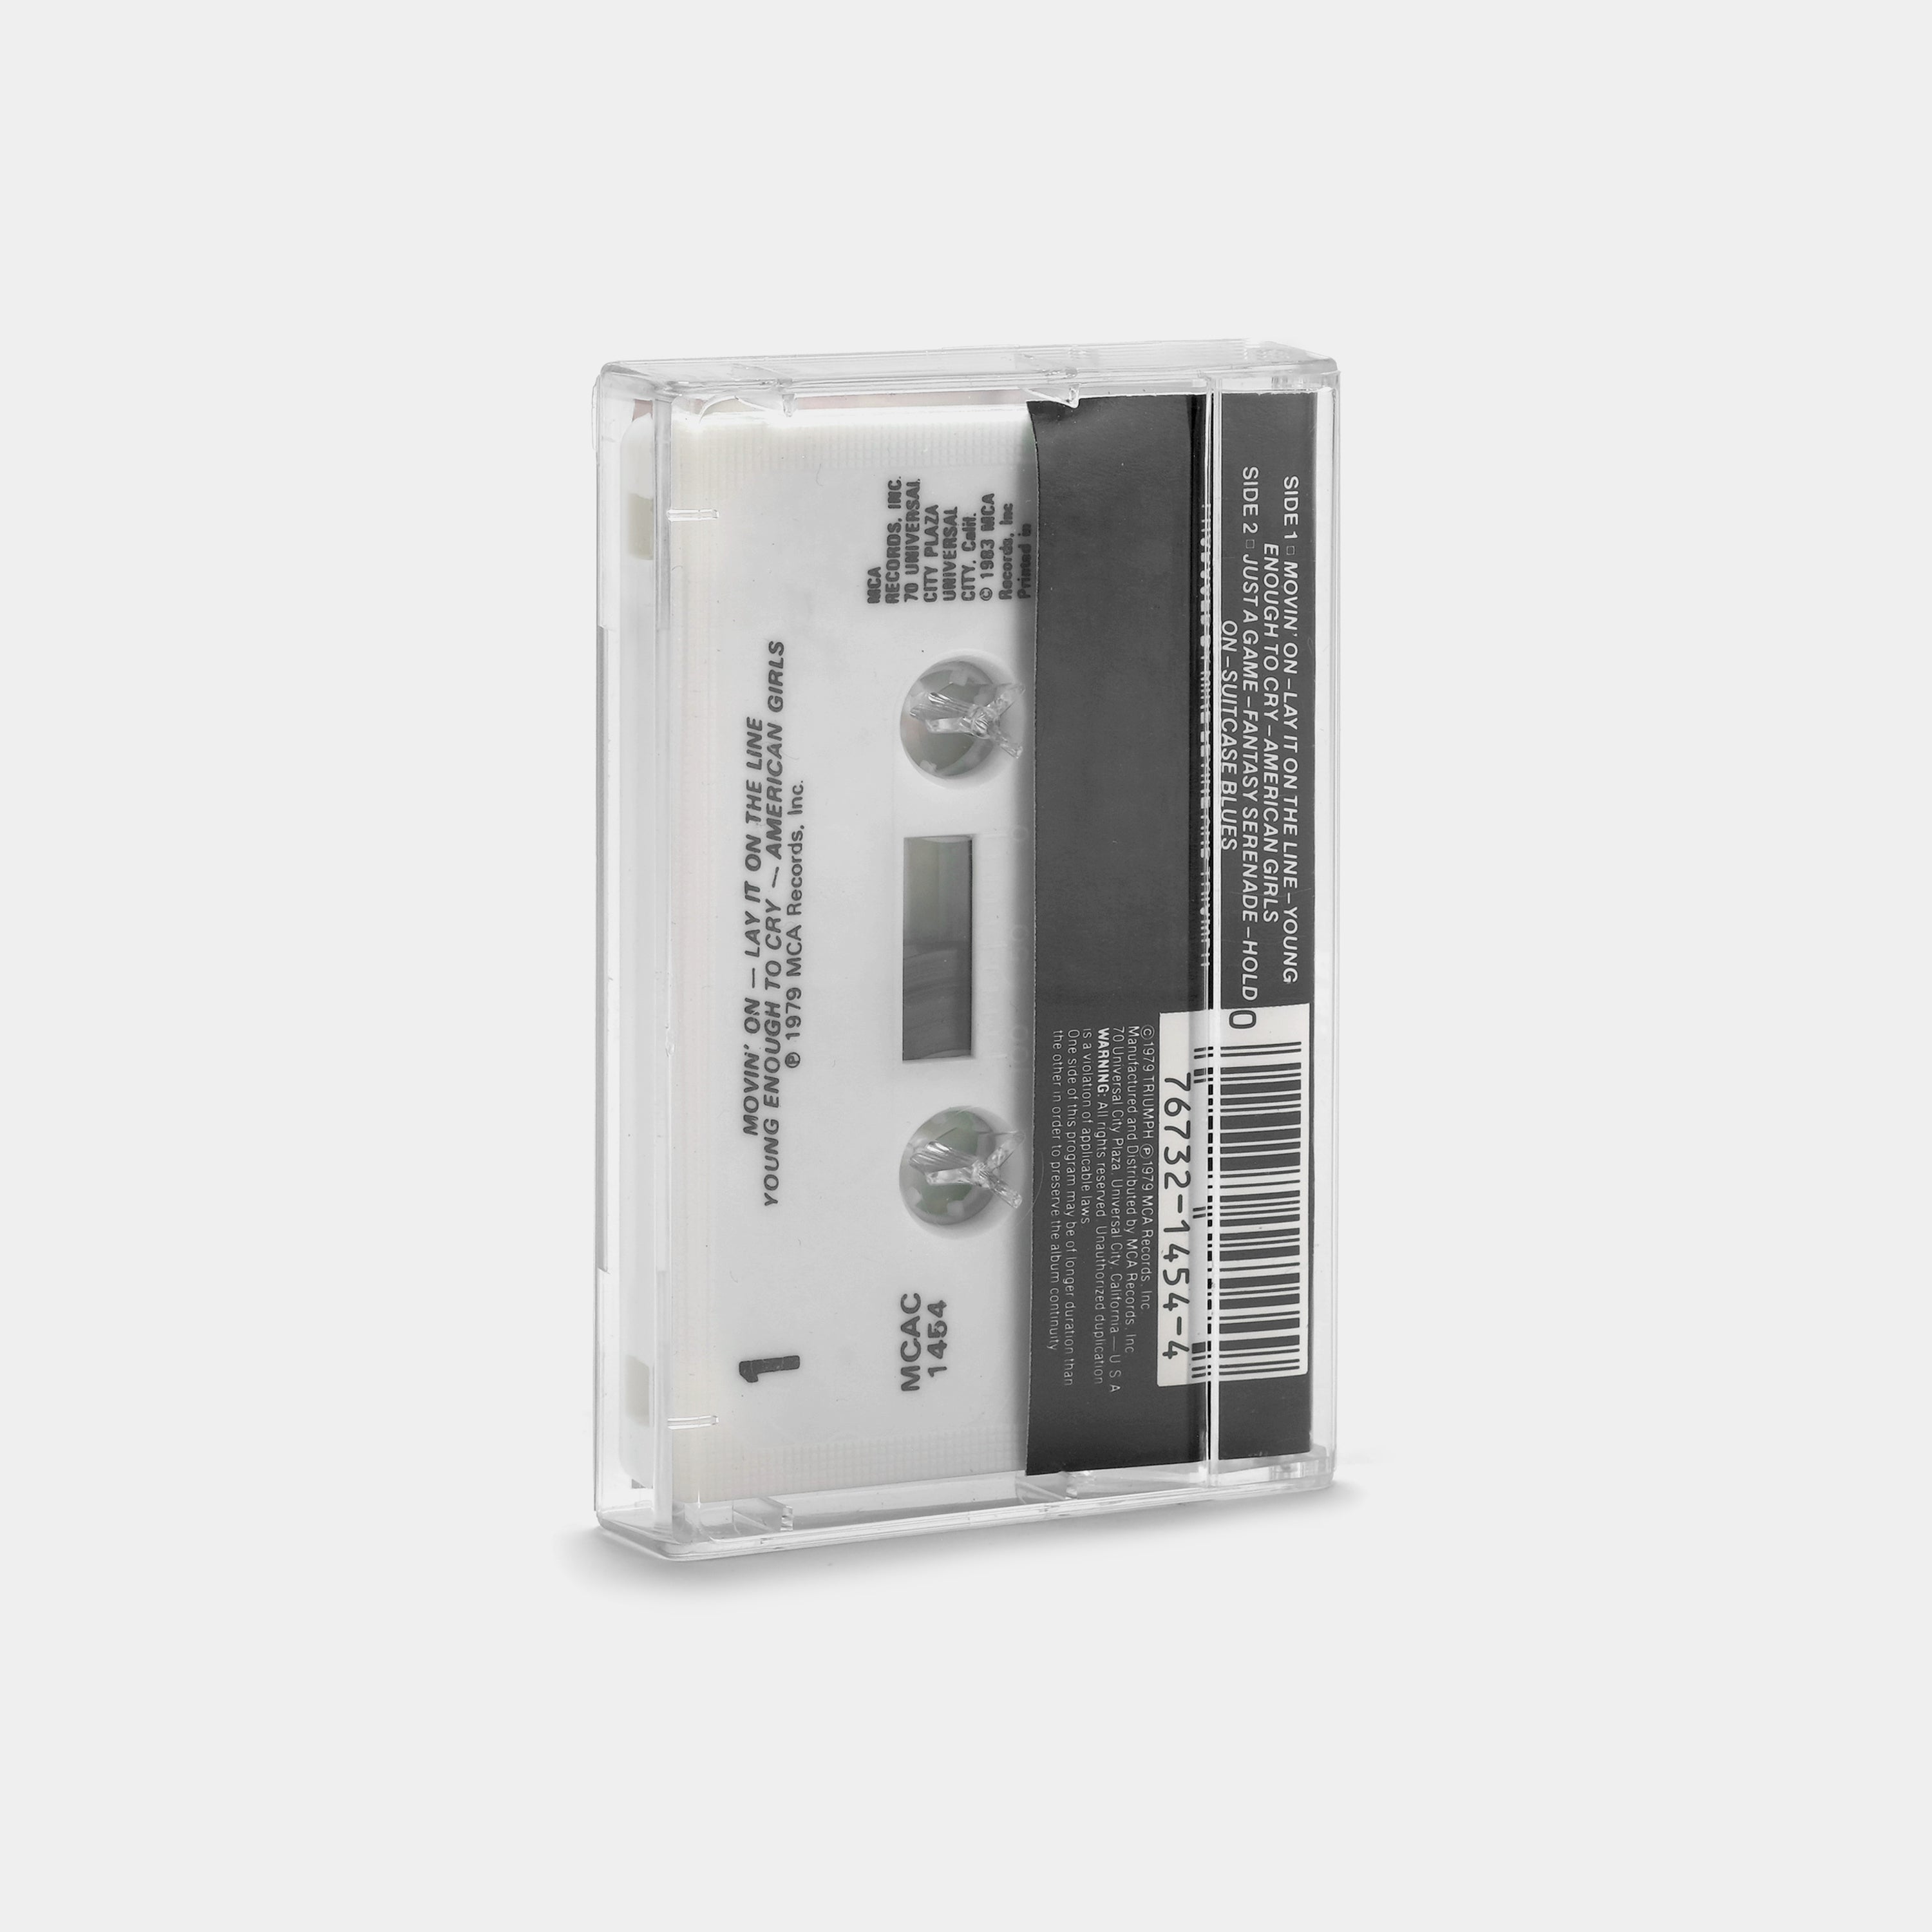 Triumph - Just A Game Cassette Tape